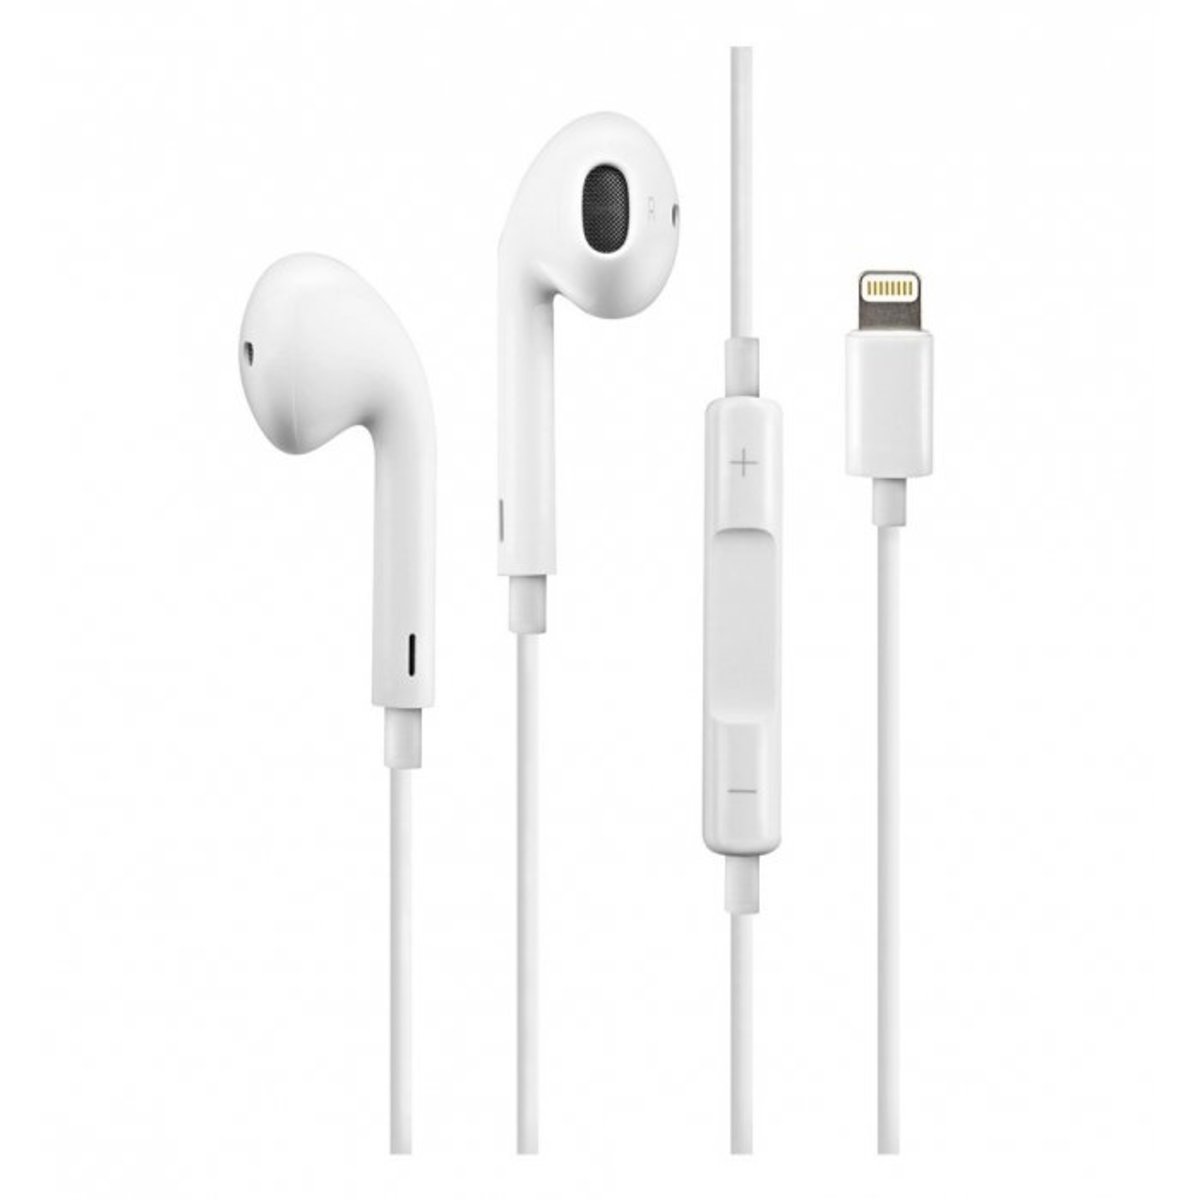 Слушалки Handsfree Apple EarPods Lightning MMTN2ZM/A бели